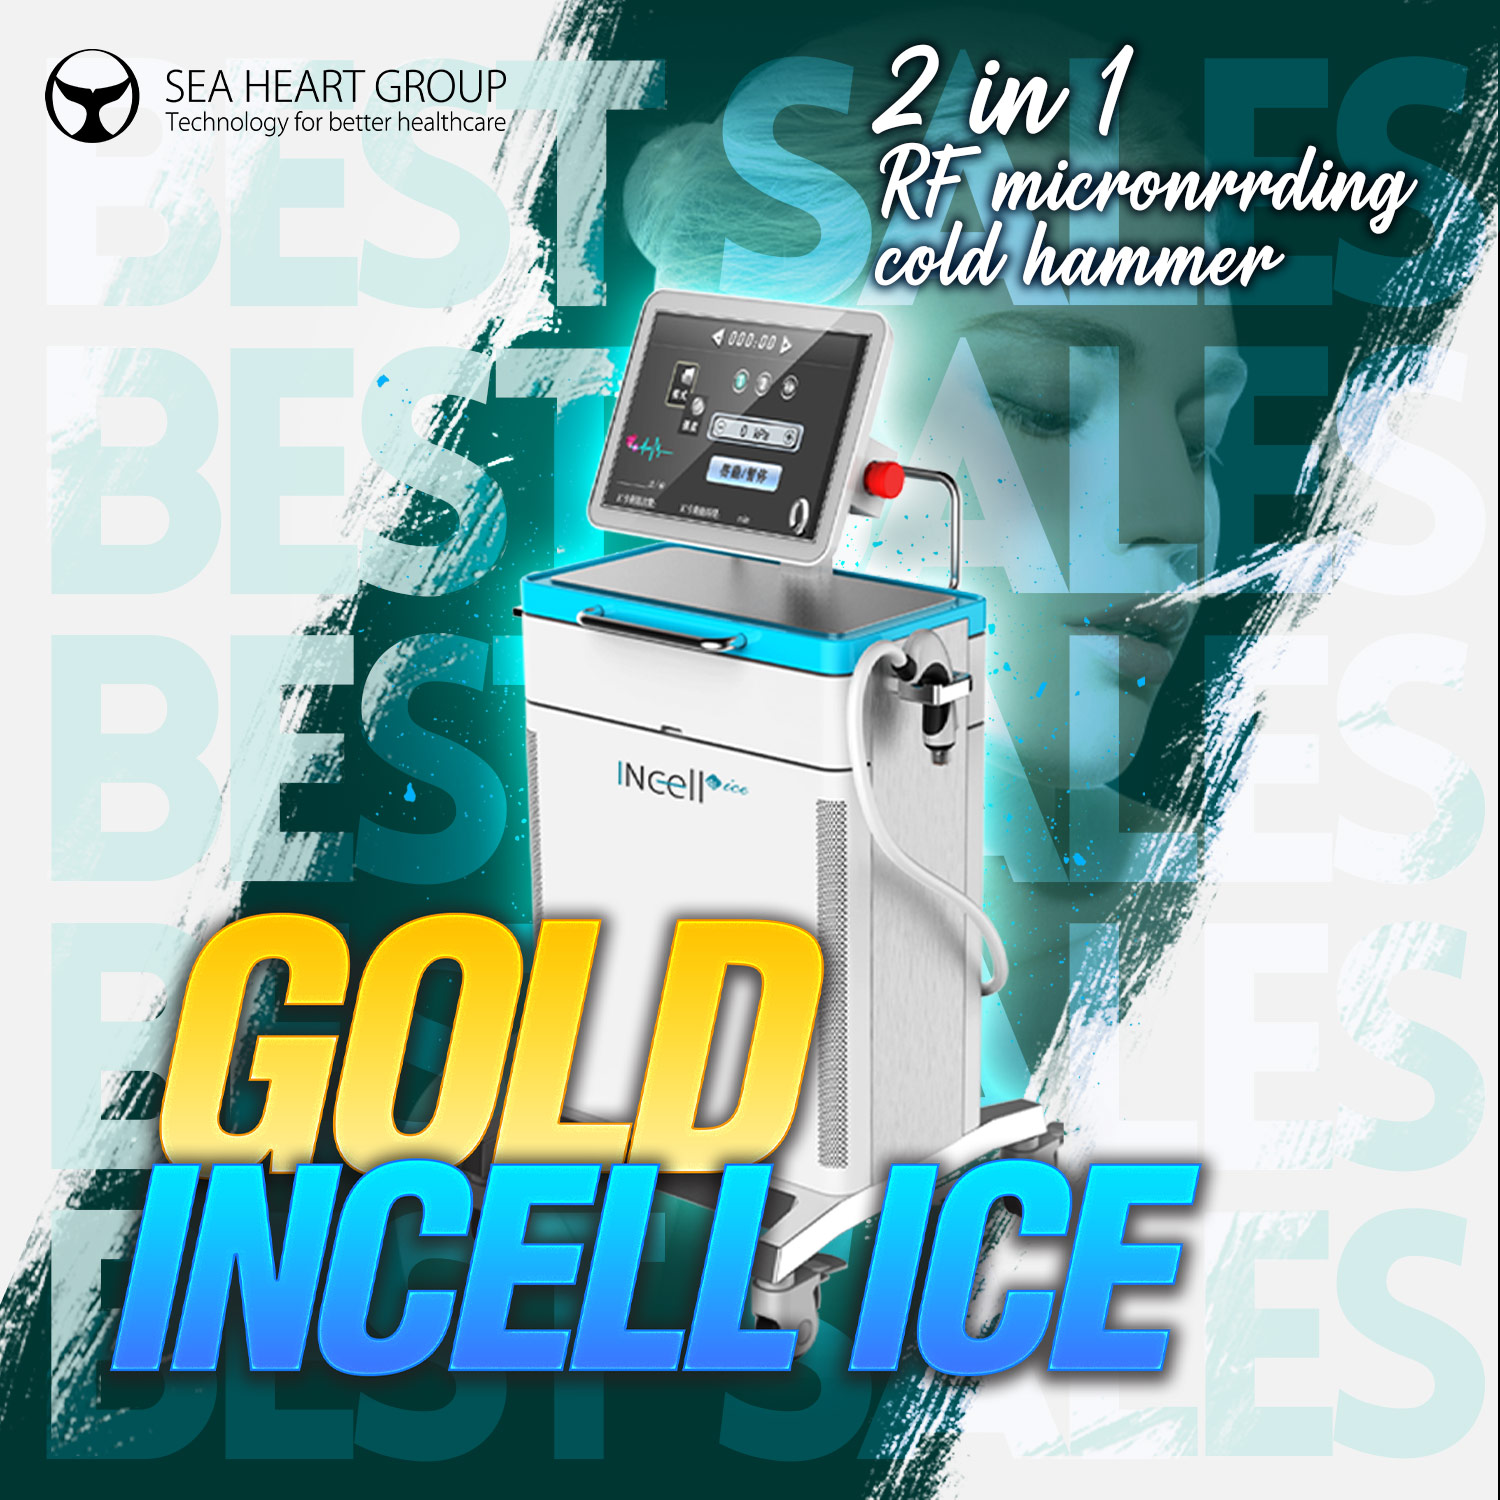 incel-ice 2 in 1 rf microneedling machine